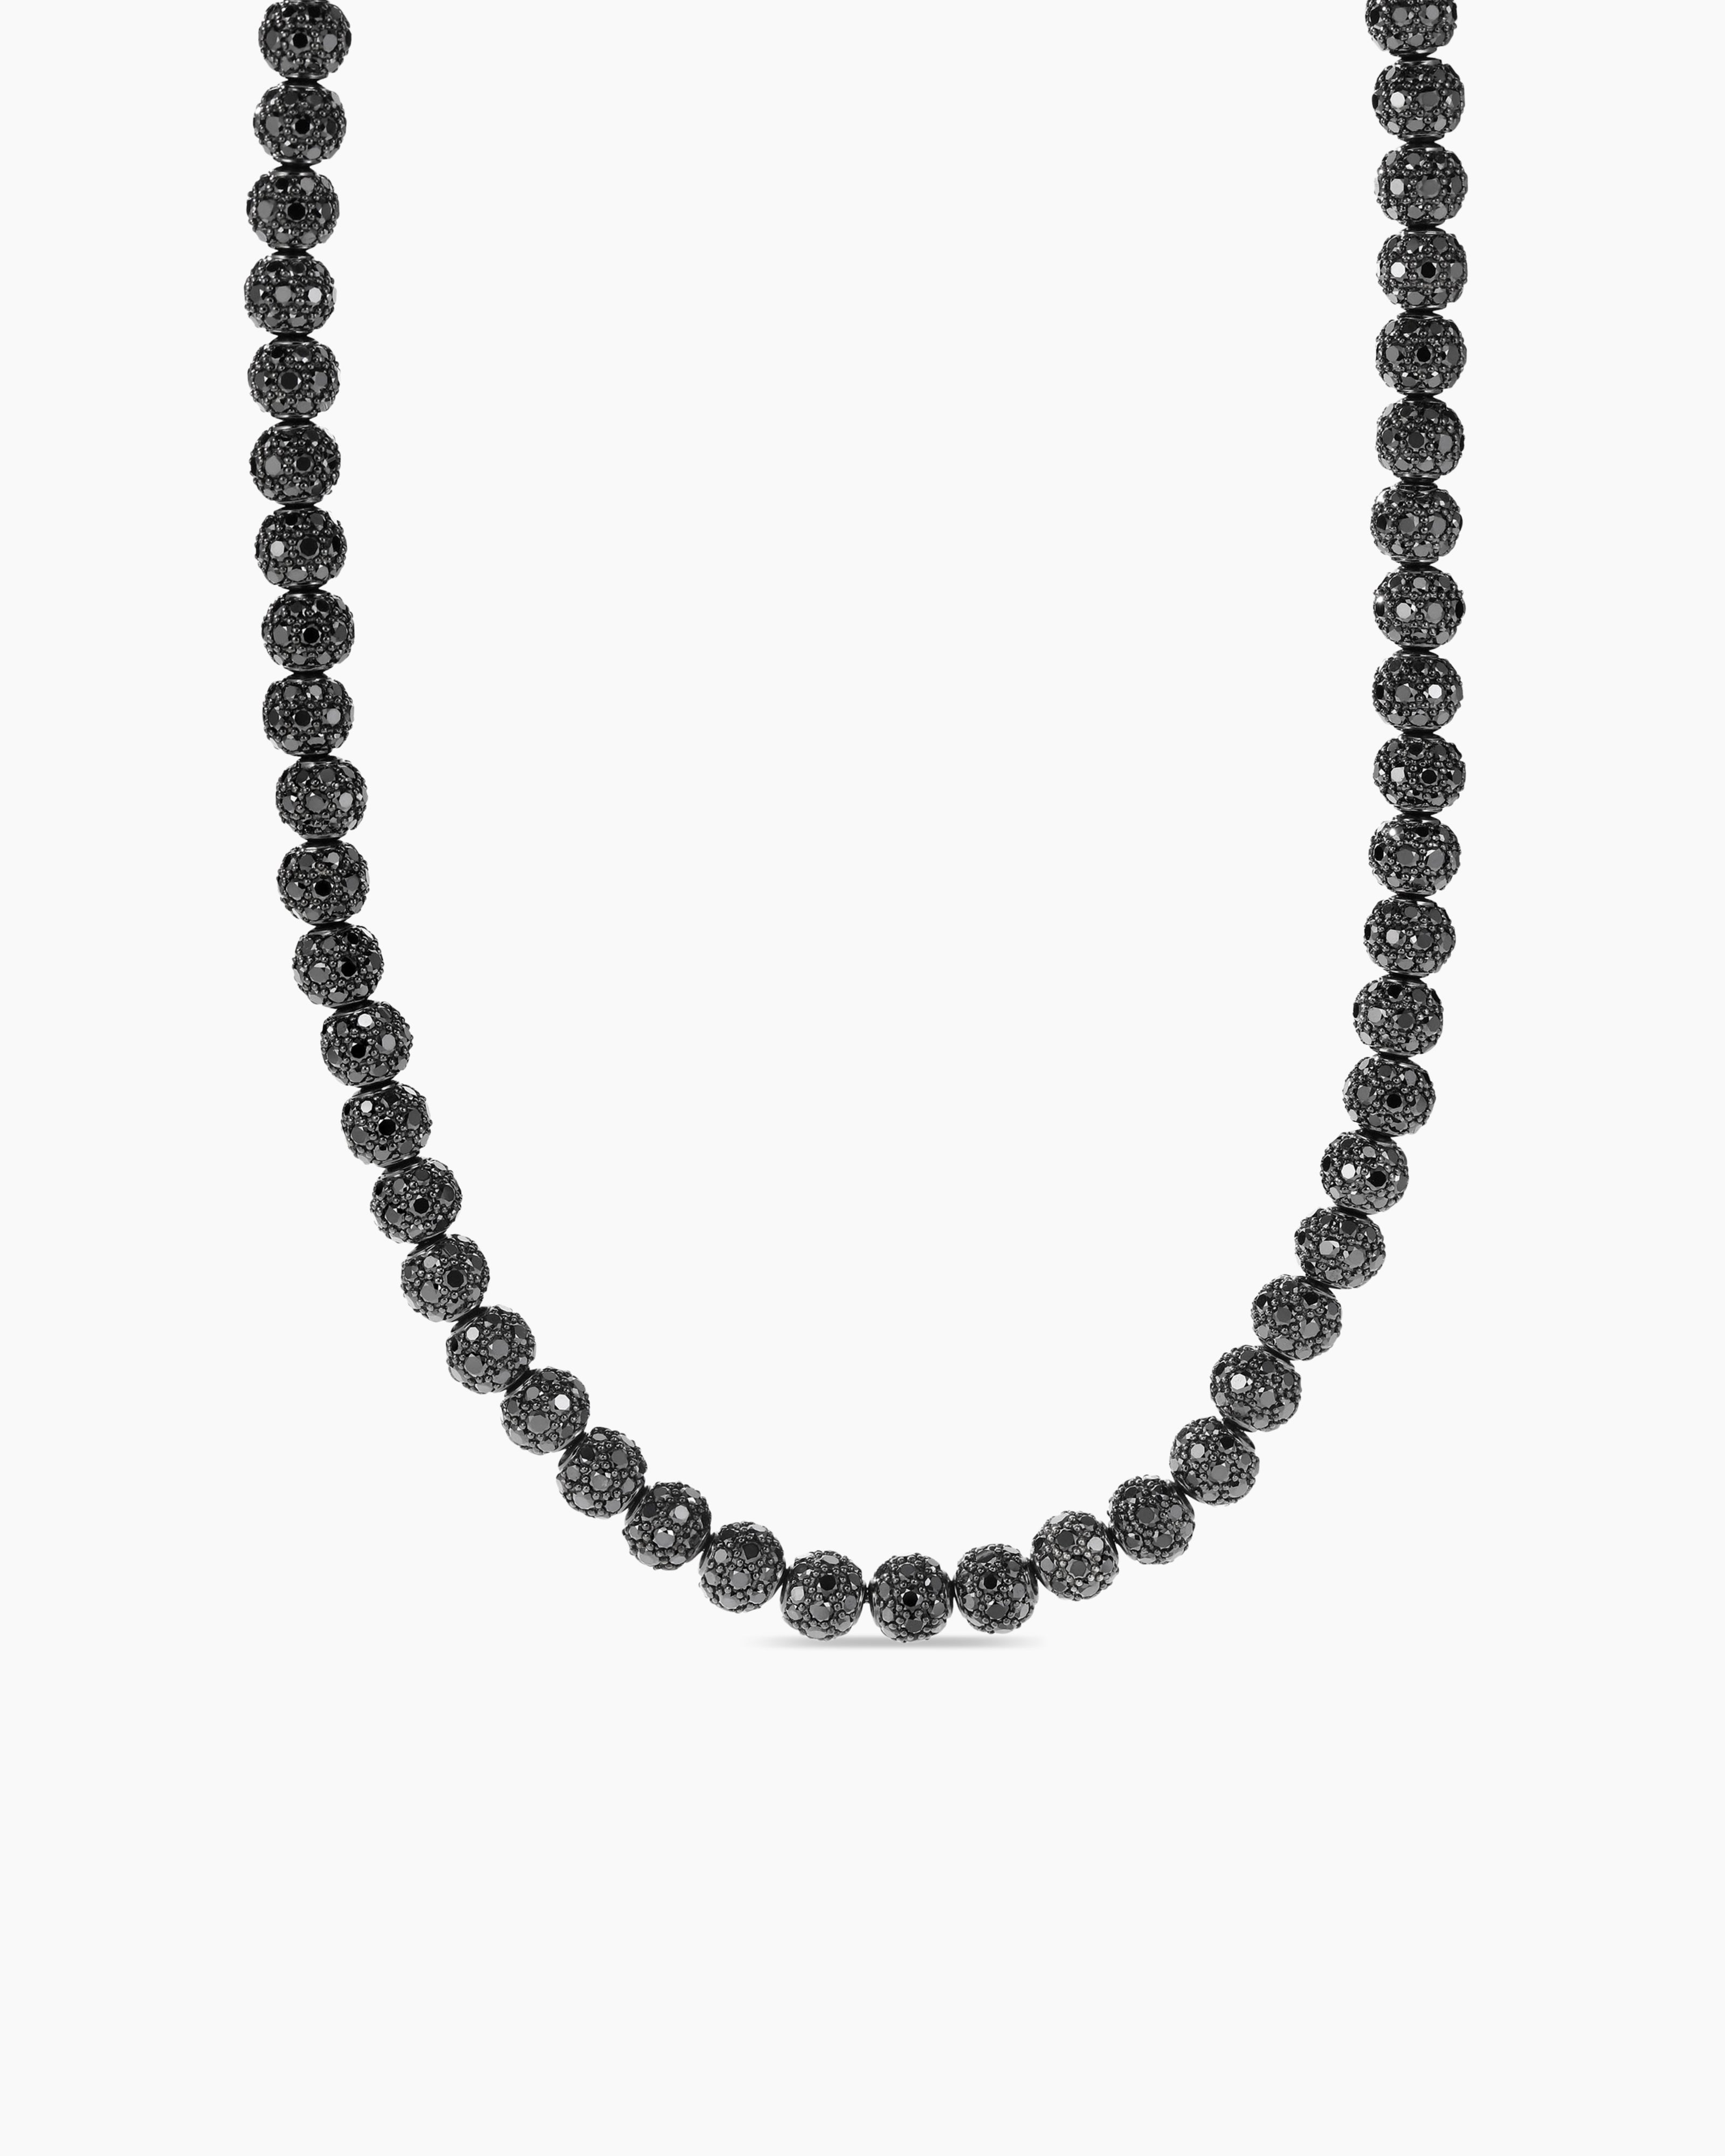 Gold Silver Black Rectangle Pendant Necklace Men Boys Trendy Stainless  Chain | eBay